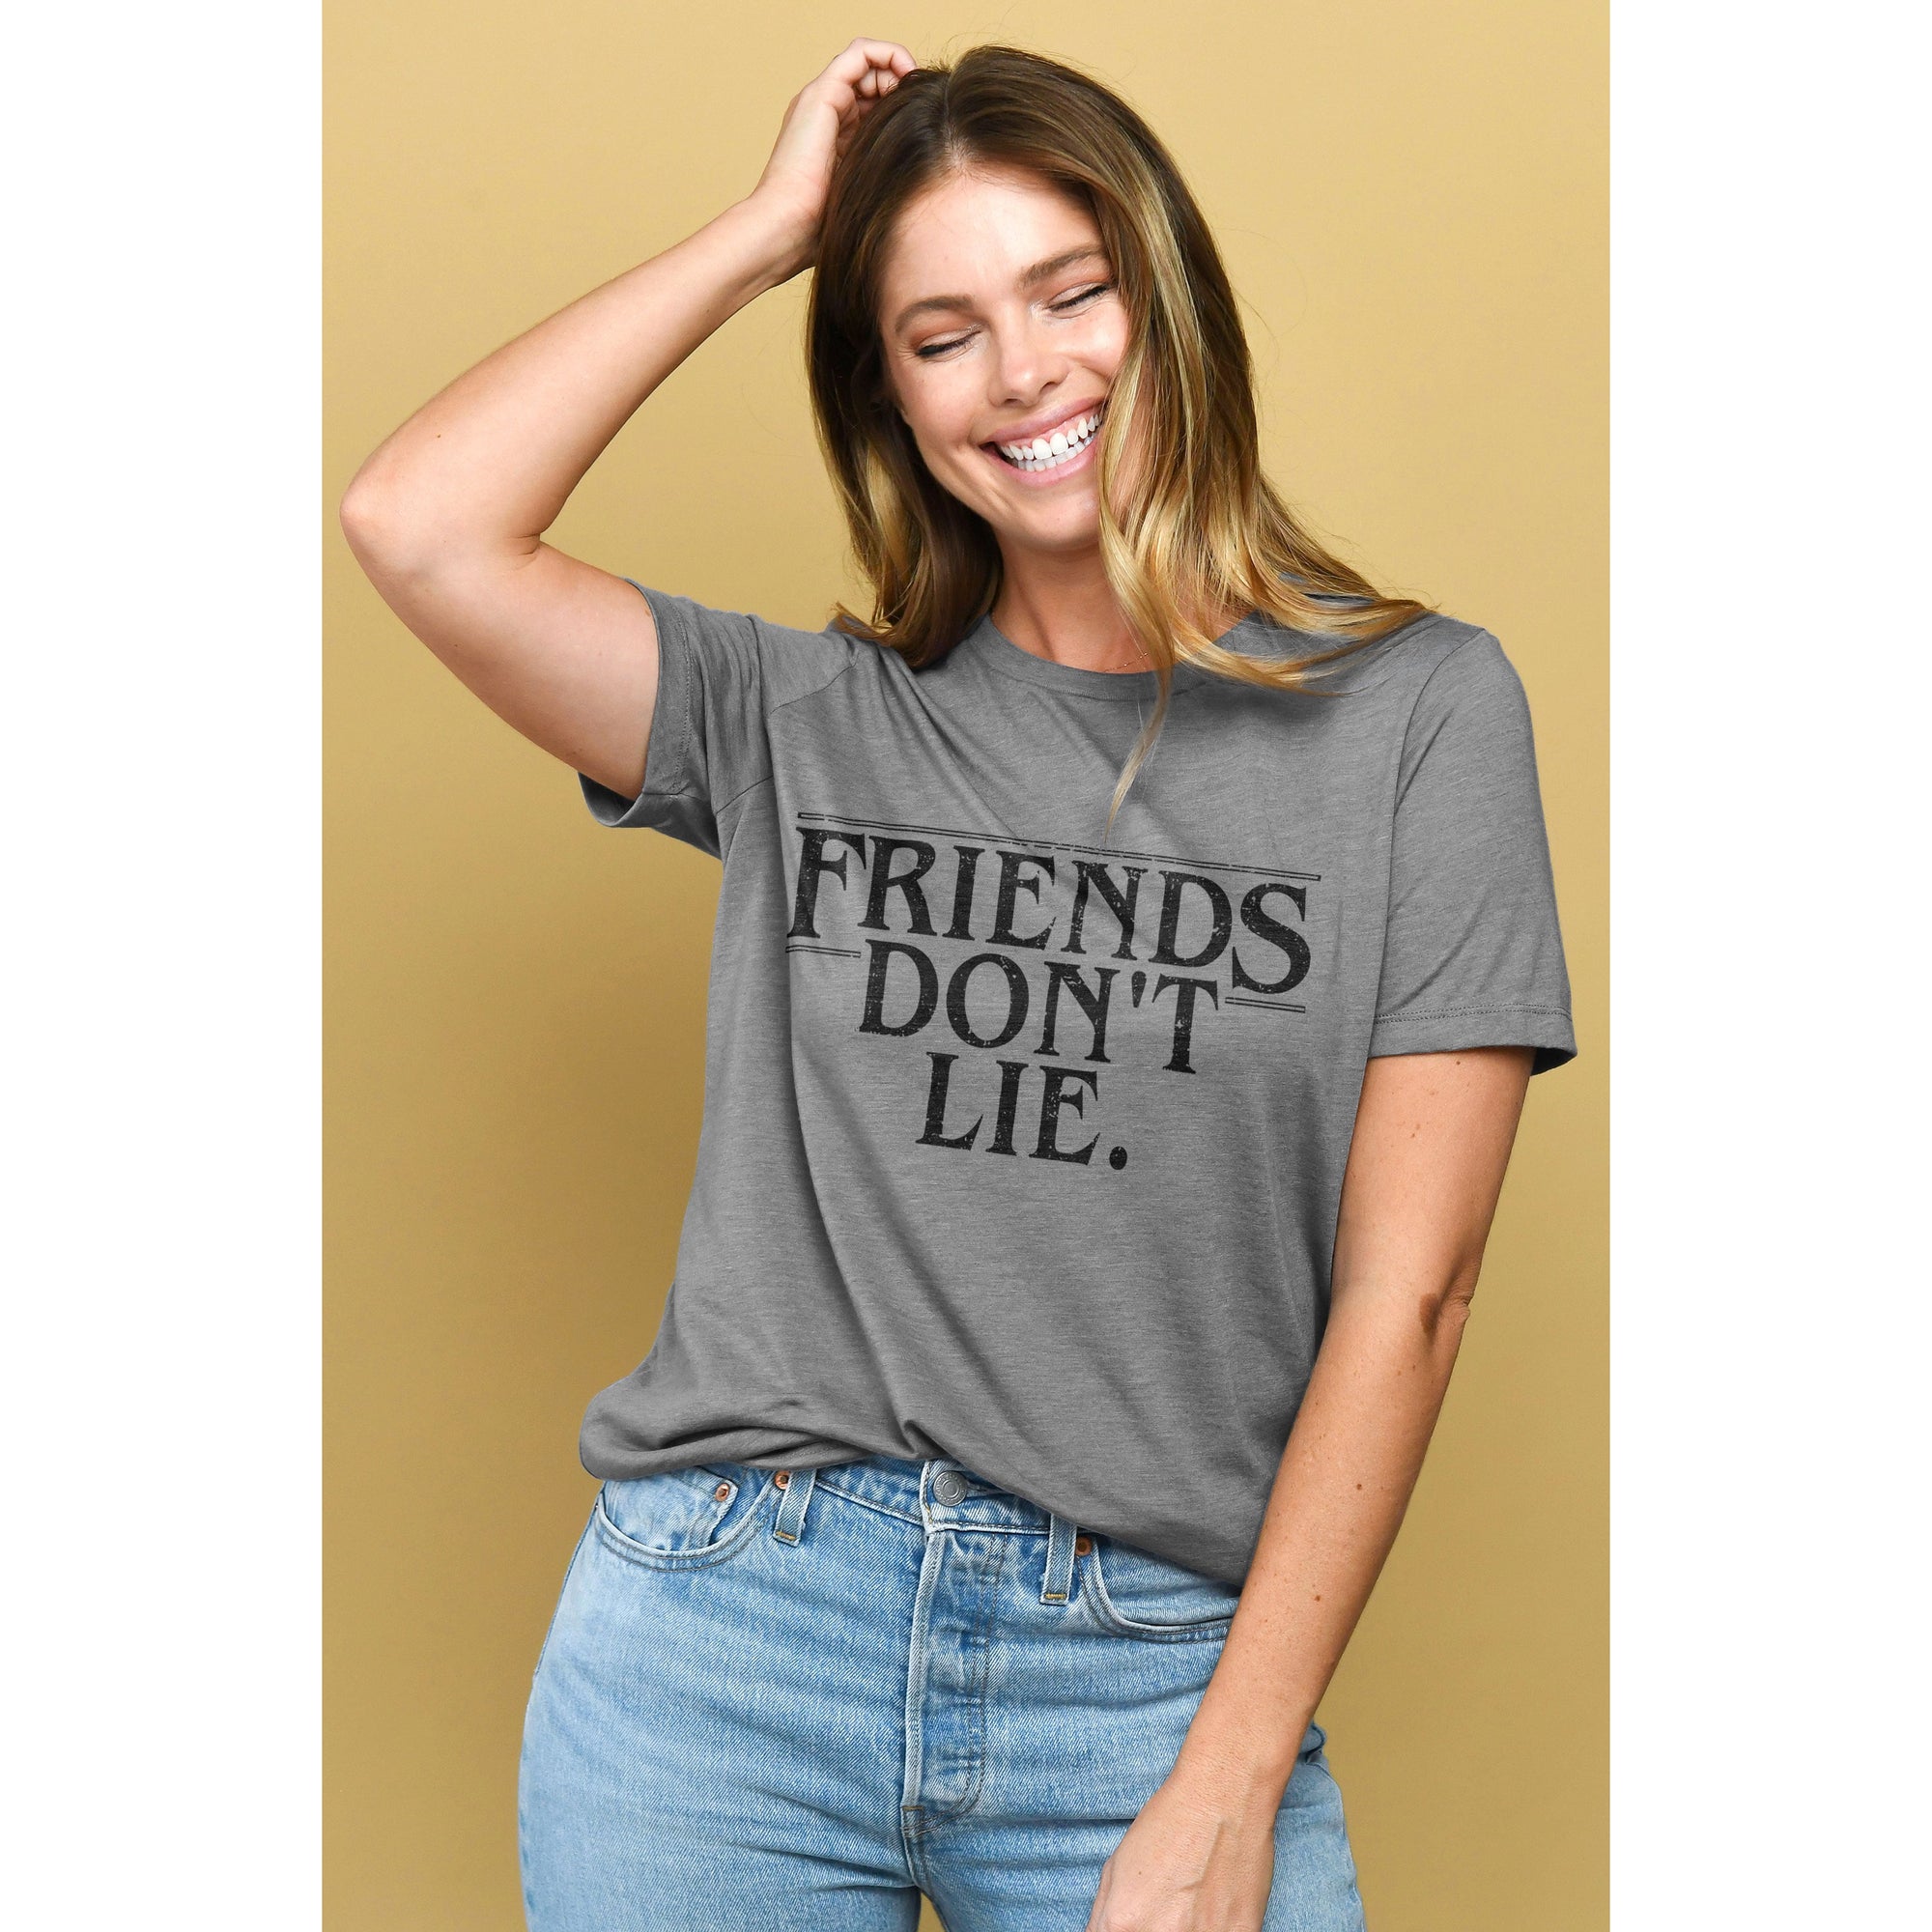 Friends Dont Lie Women's Relaxed Crewneck T-Shirt Top Tee Grey Model Image